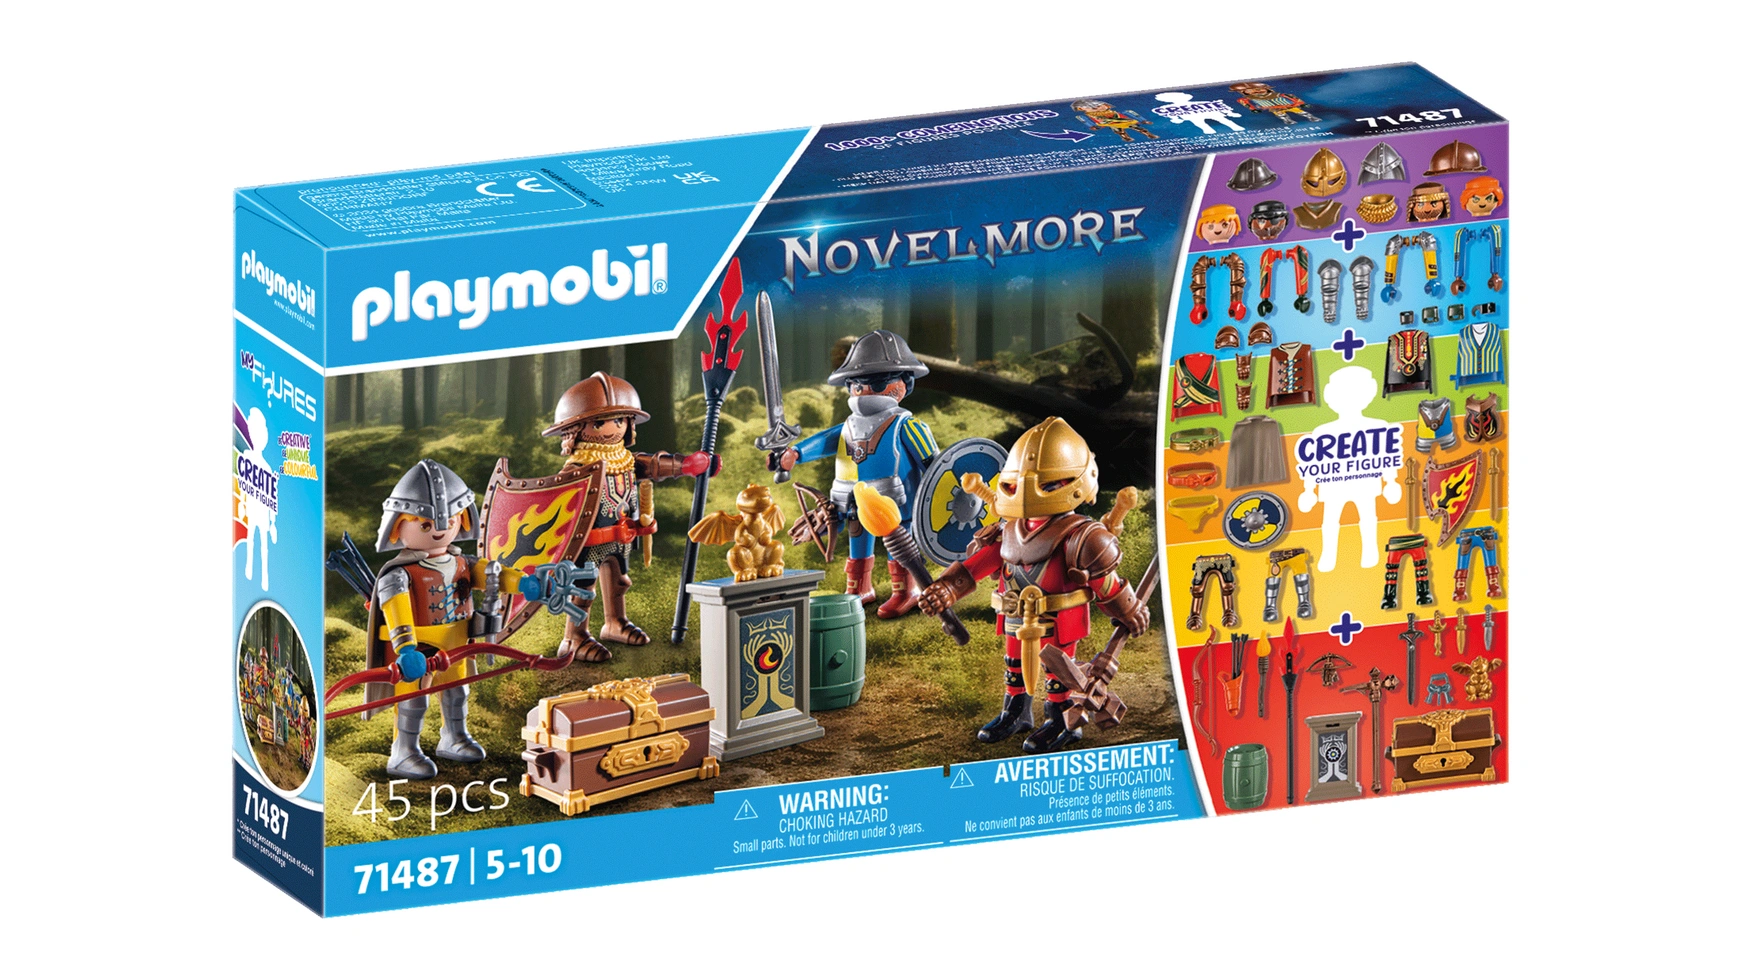 Novelmore мои фигурки: рыцари новелмора Playmobil novelmore мои фигурки рыцари новелмора playmobil